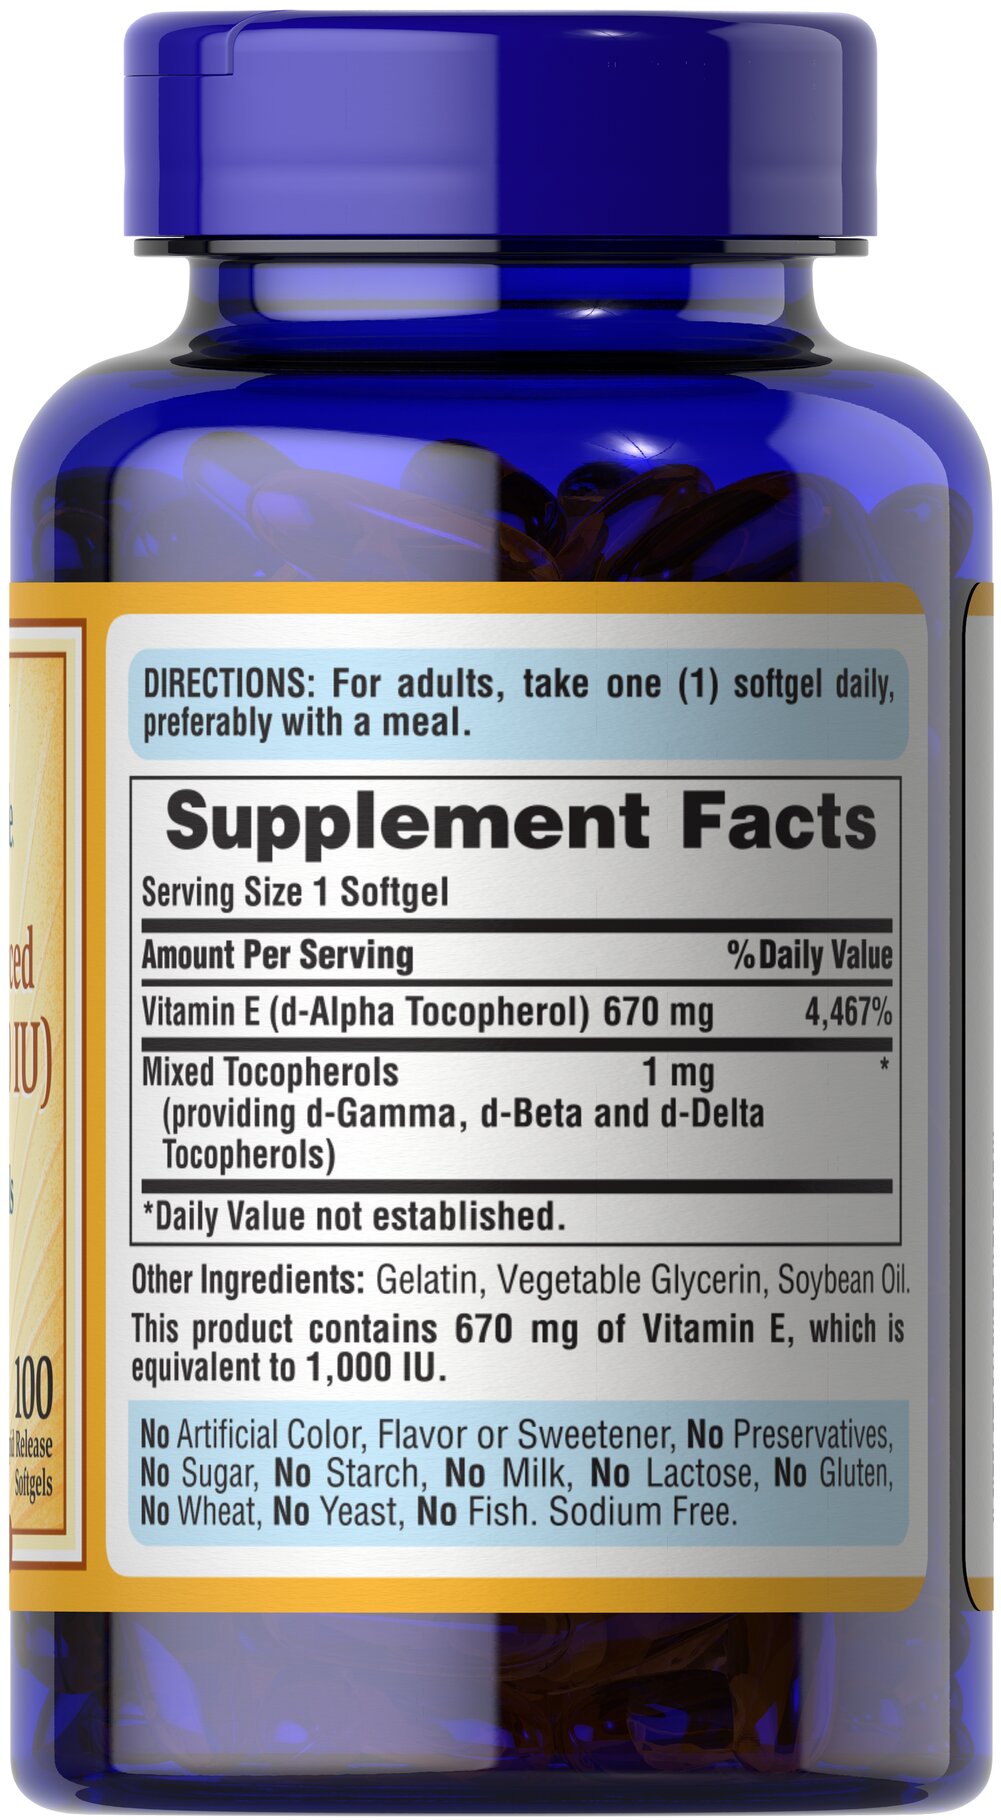 Vitamina E natural con Tocoferoles mixtos. 670mg (1000ui) x 100 cápsulas. (sofgels). Super completa.